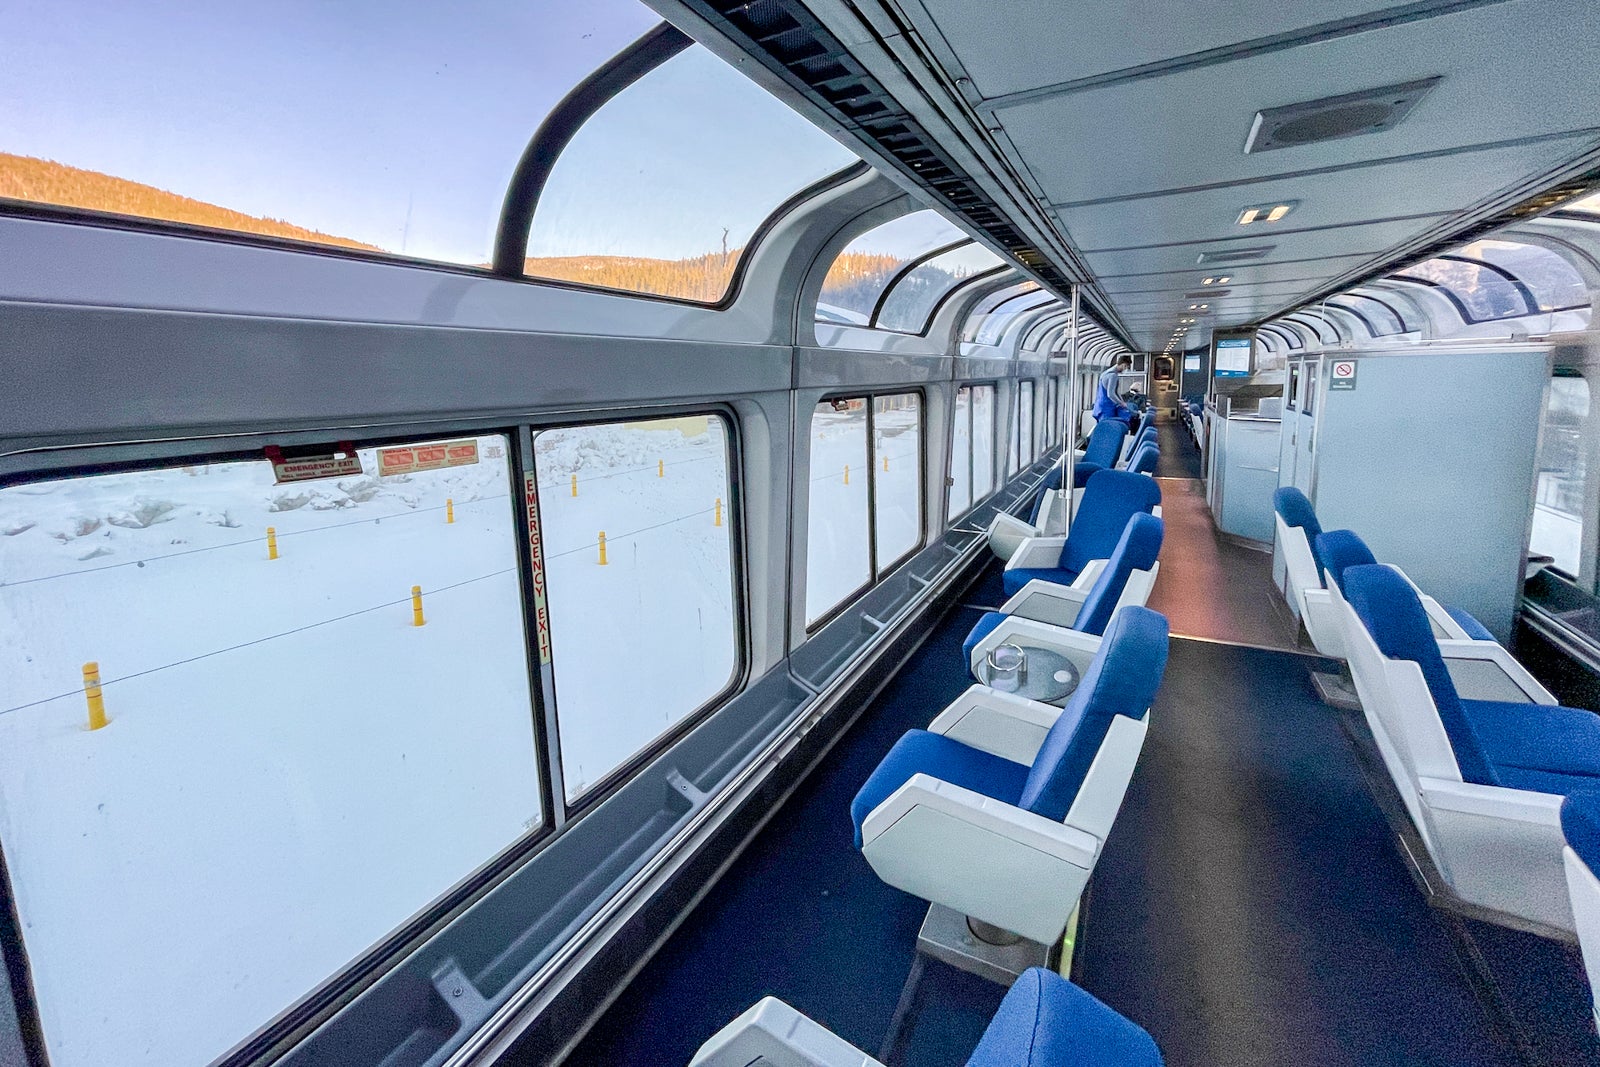 floor-to-ceiling windows in train car